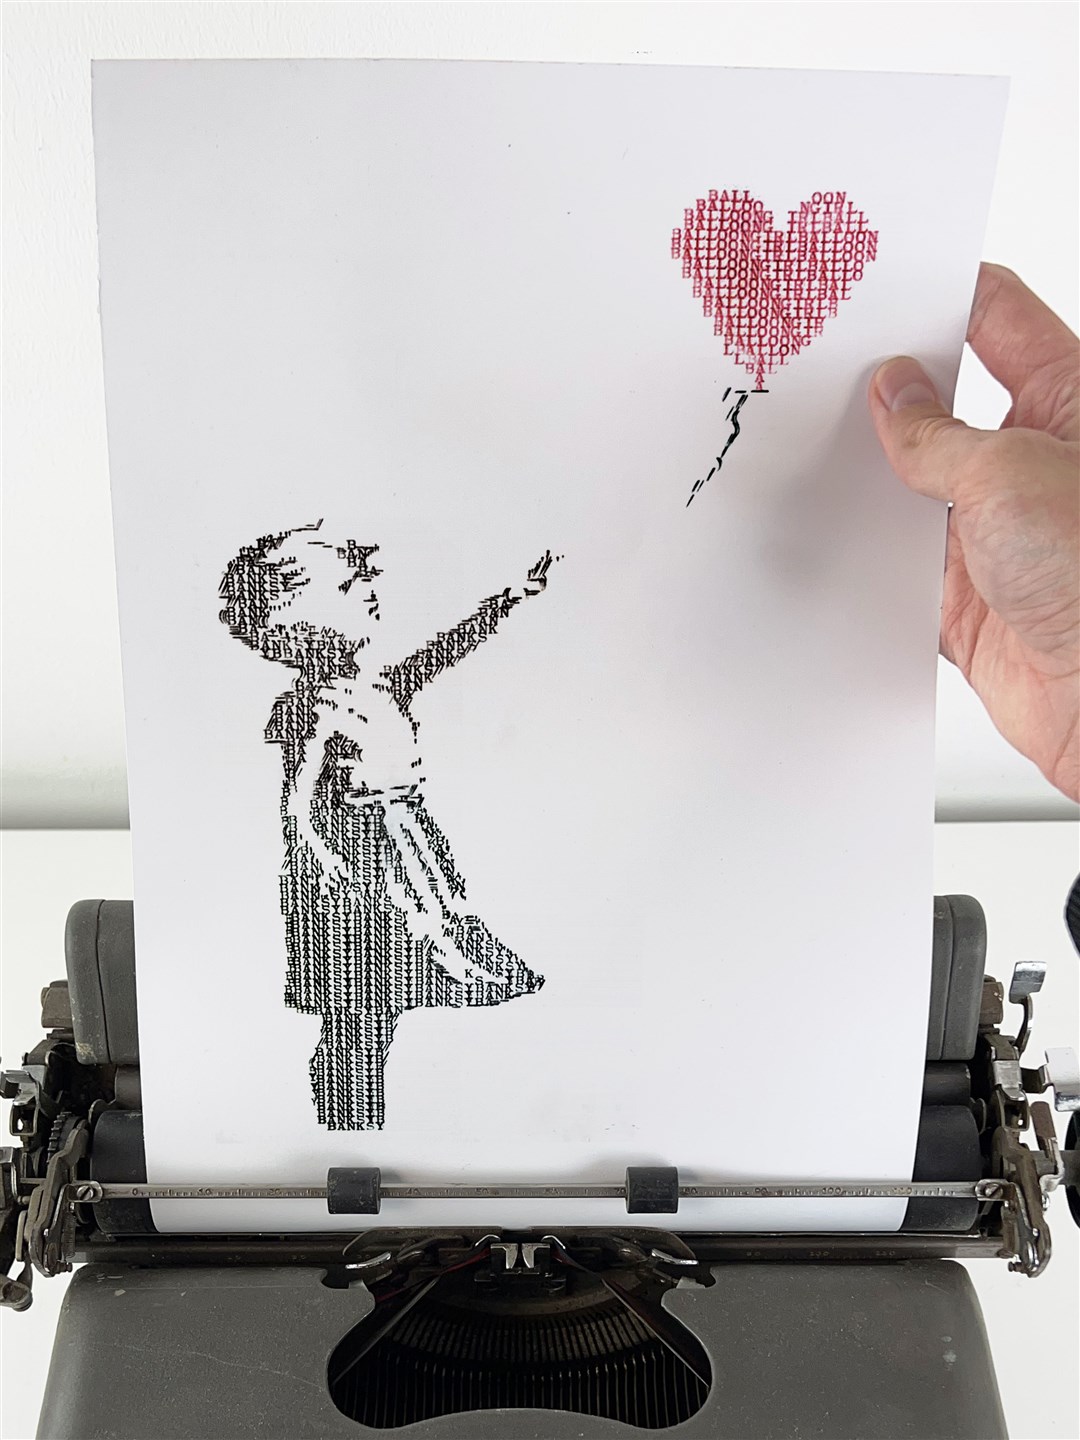 Banksy’s Girl With Balloon mural made using typewriter (James Cook)